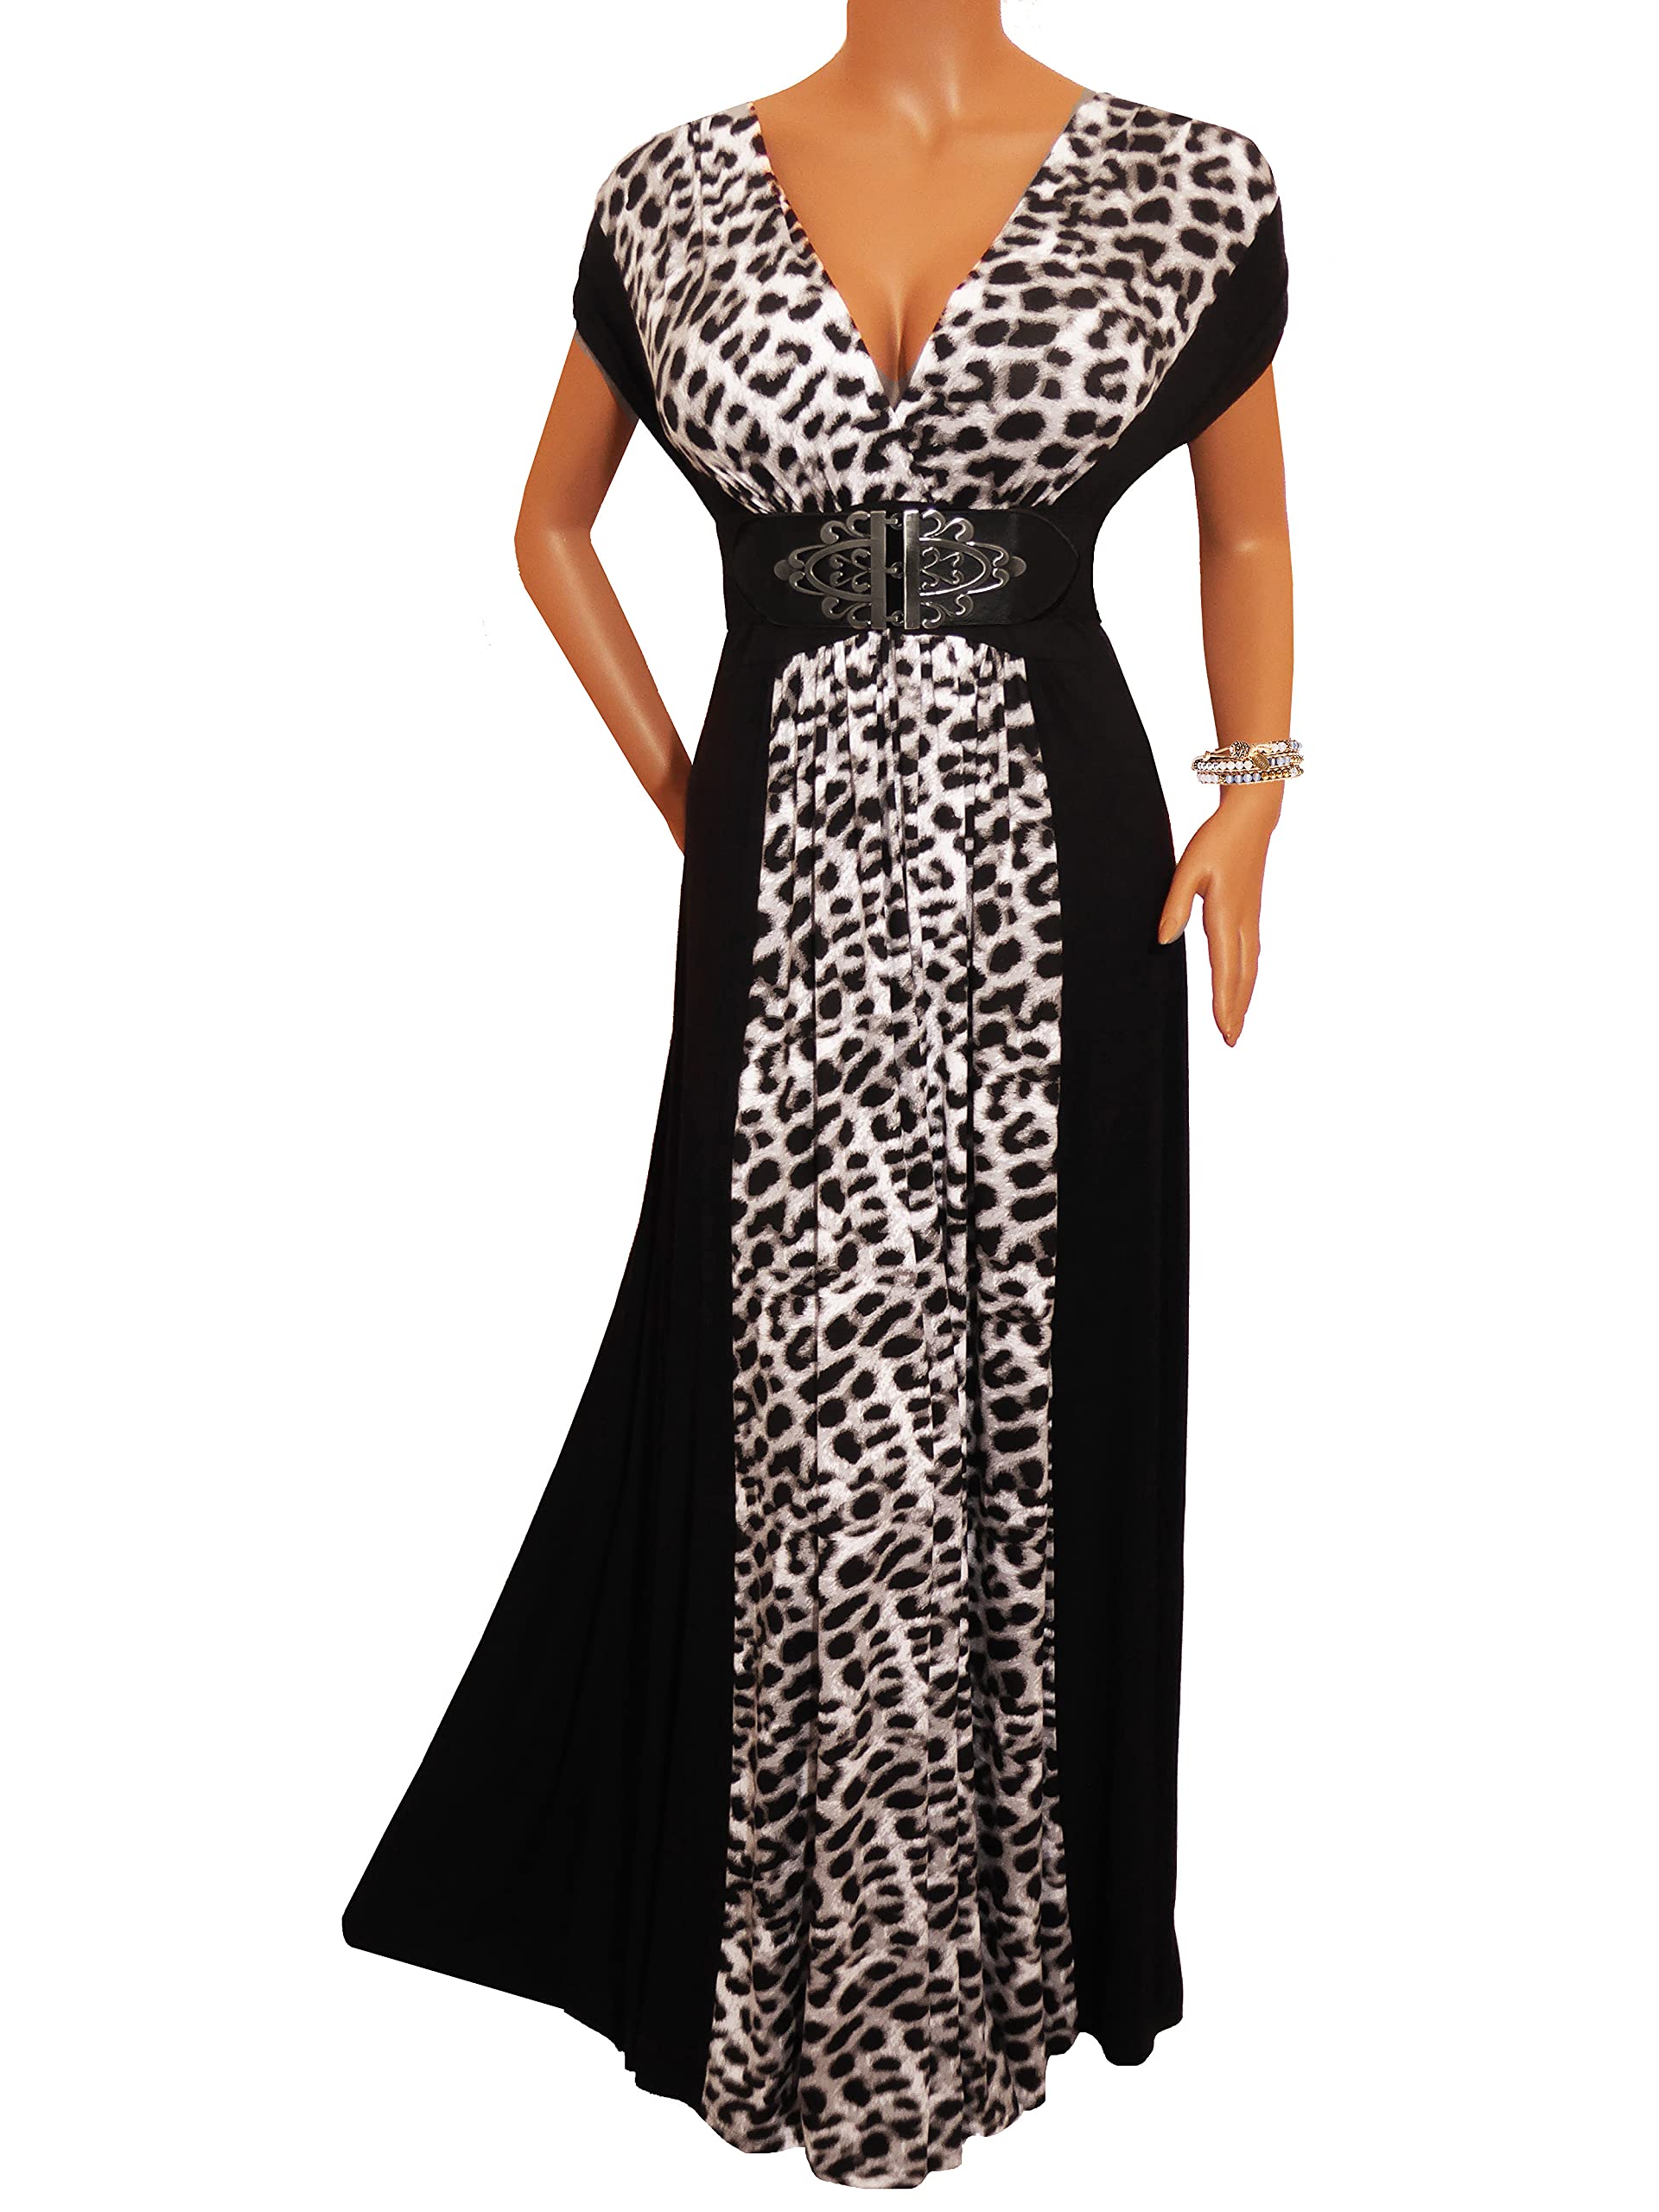 Funfash Plus Size Women Black Dress Leopard Print Long Cocktail Maxi Dress, Renaissance Dress with Belt Included, Black and White Dress for Women 1X